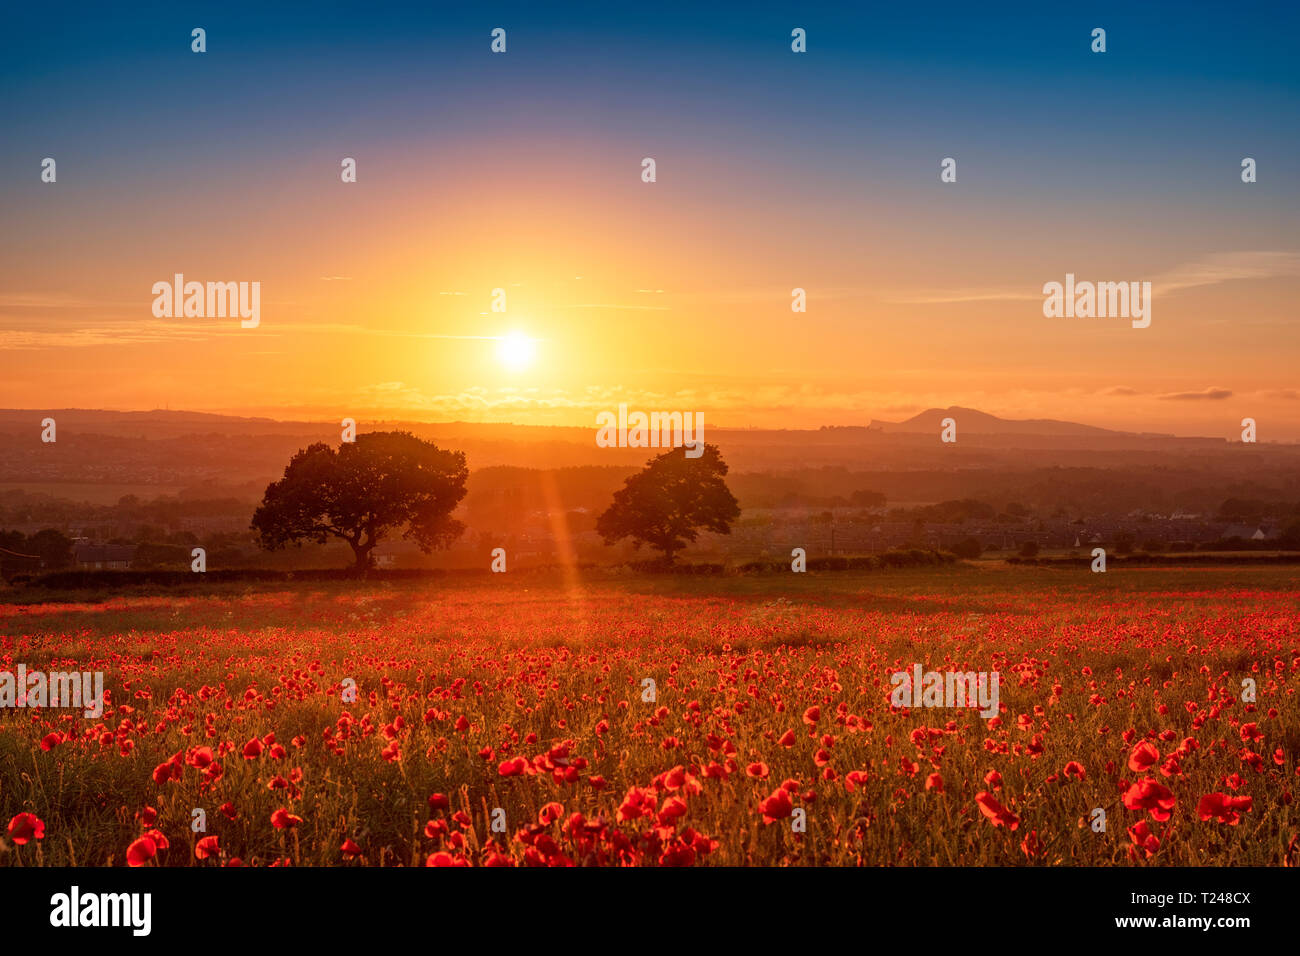 UK, Scotland, Midlothian, Poppy field at sunset Stock Photo